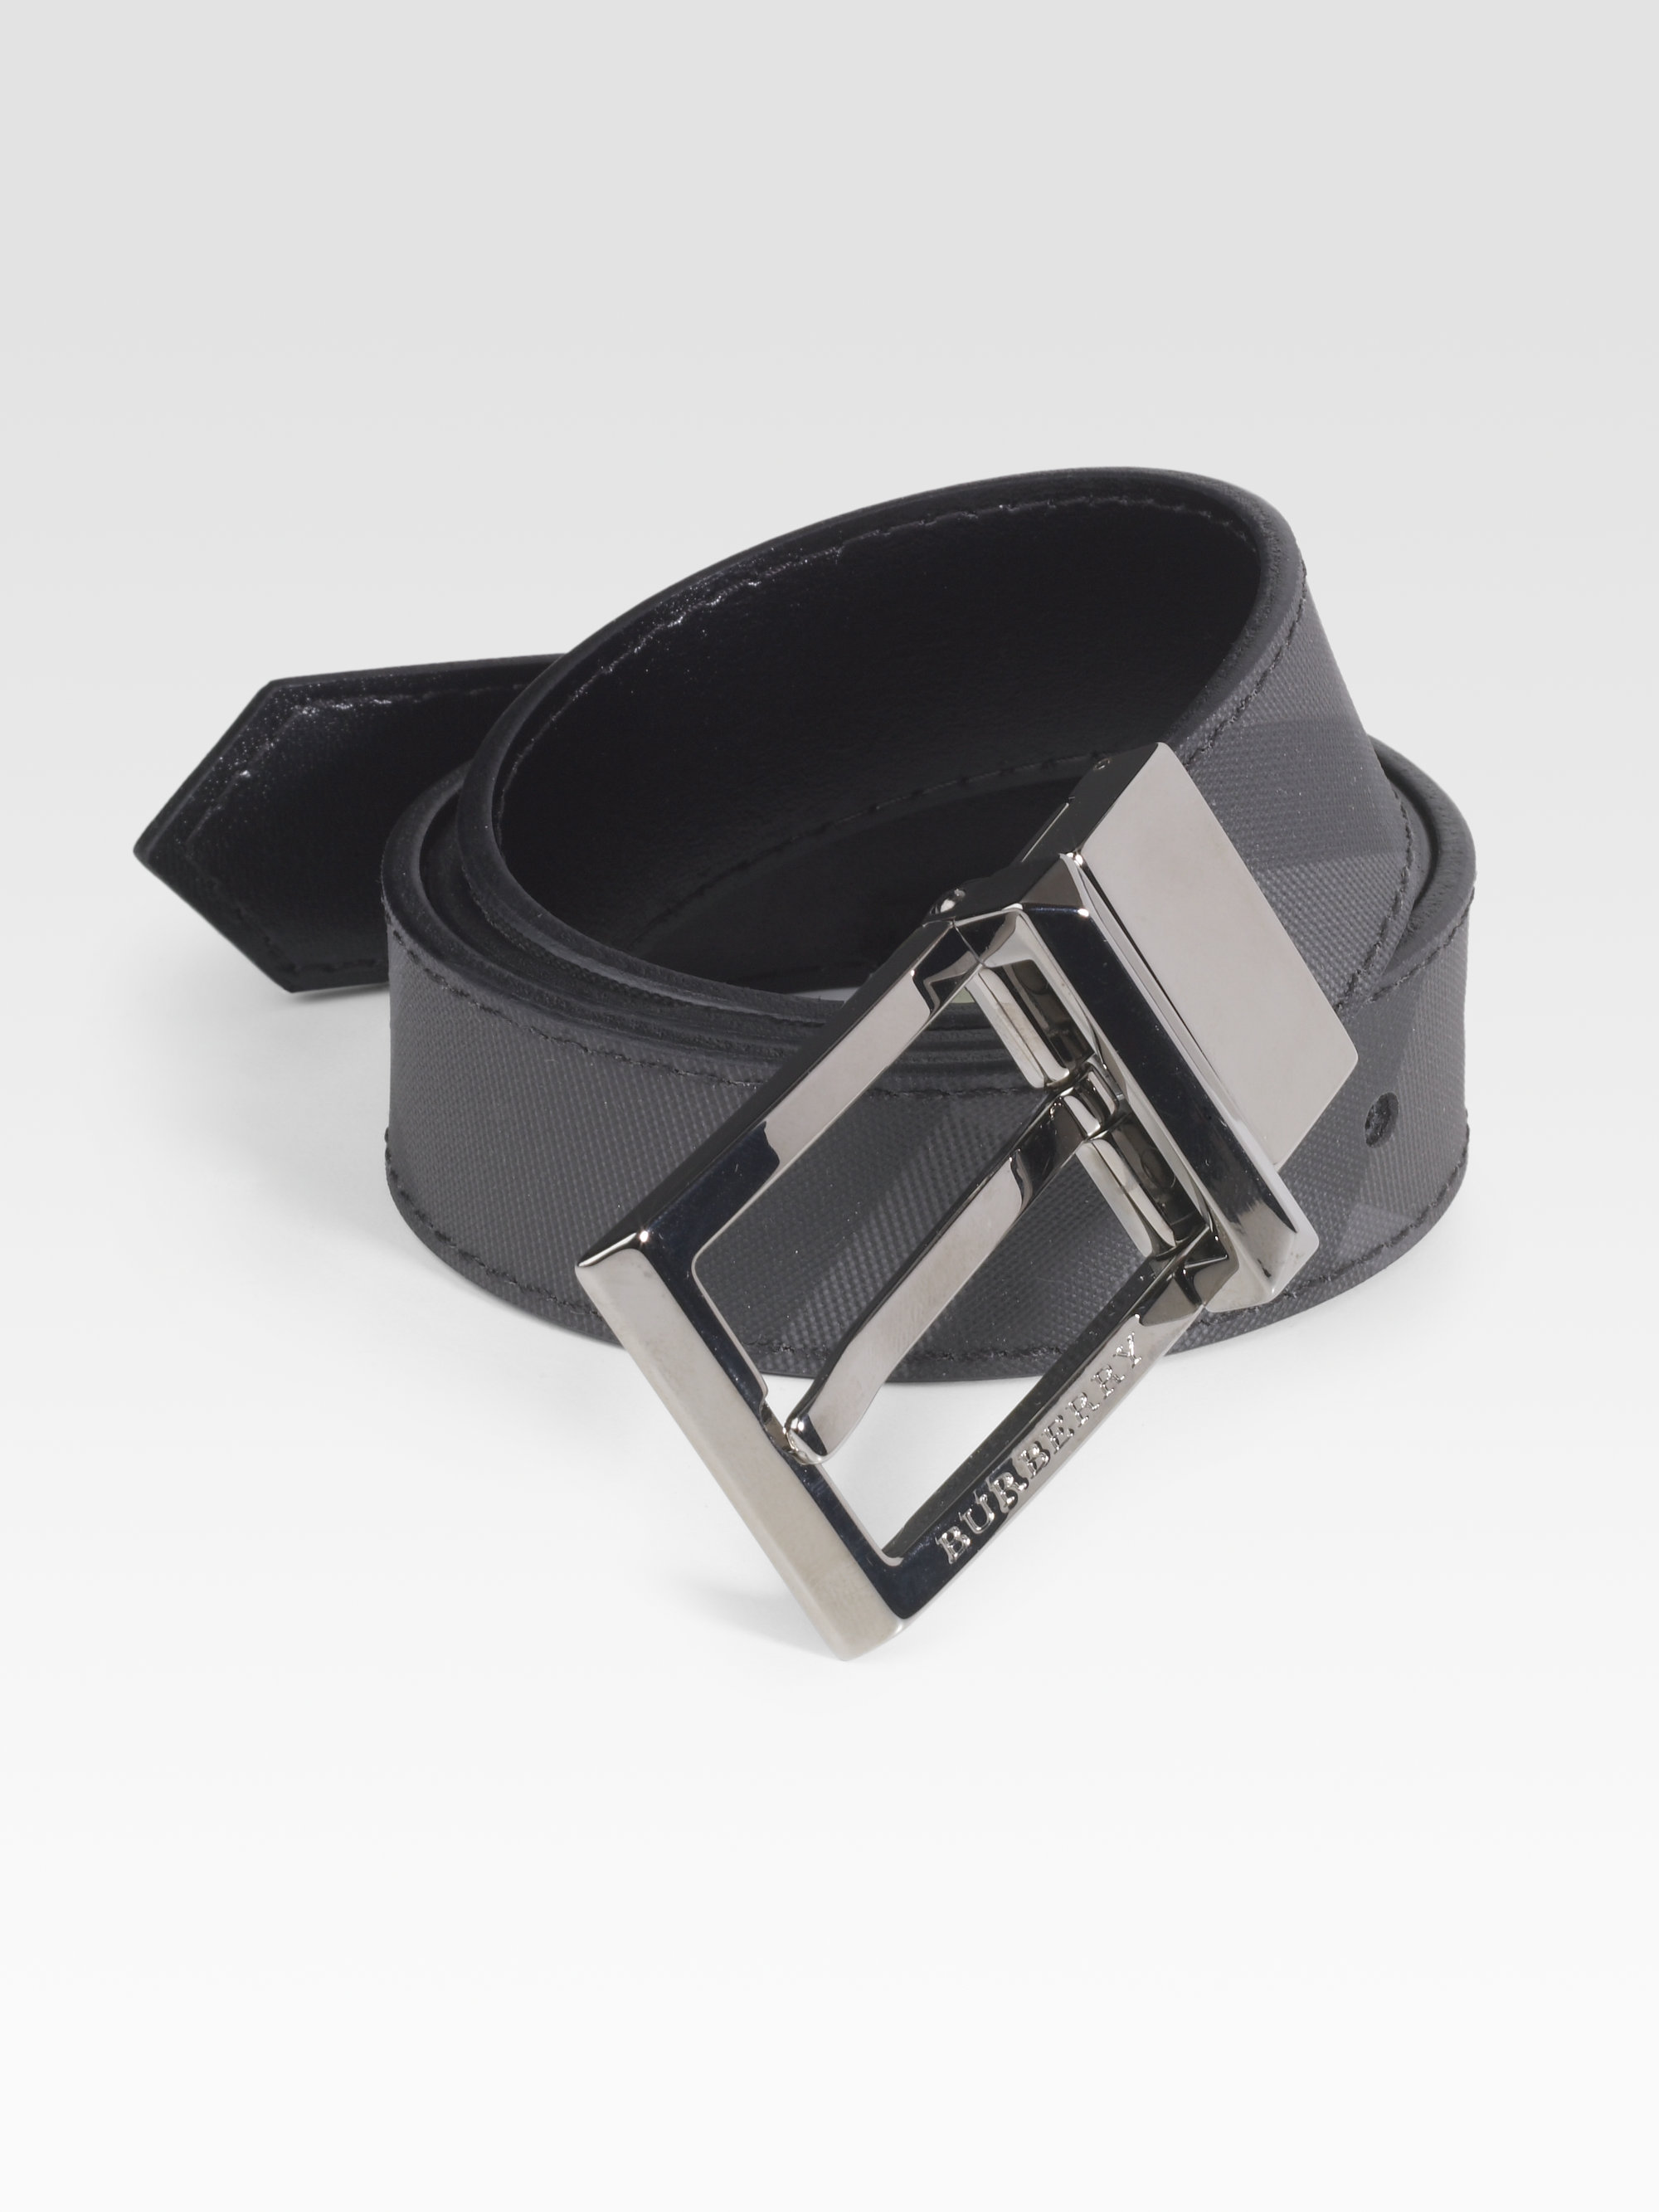 Burberry Reversible Leather Belt in Black for Men - Lyst